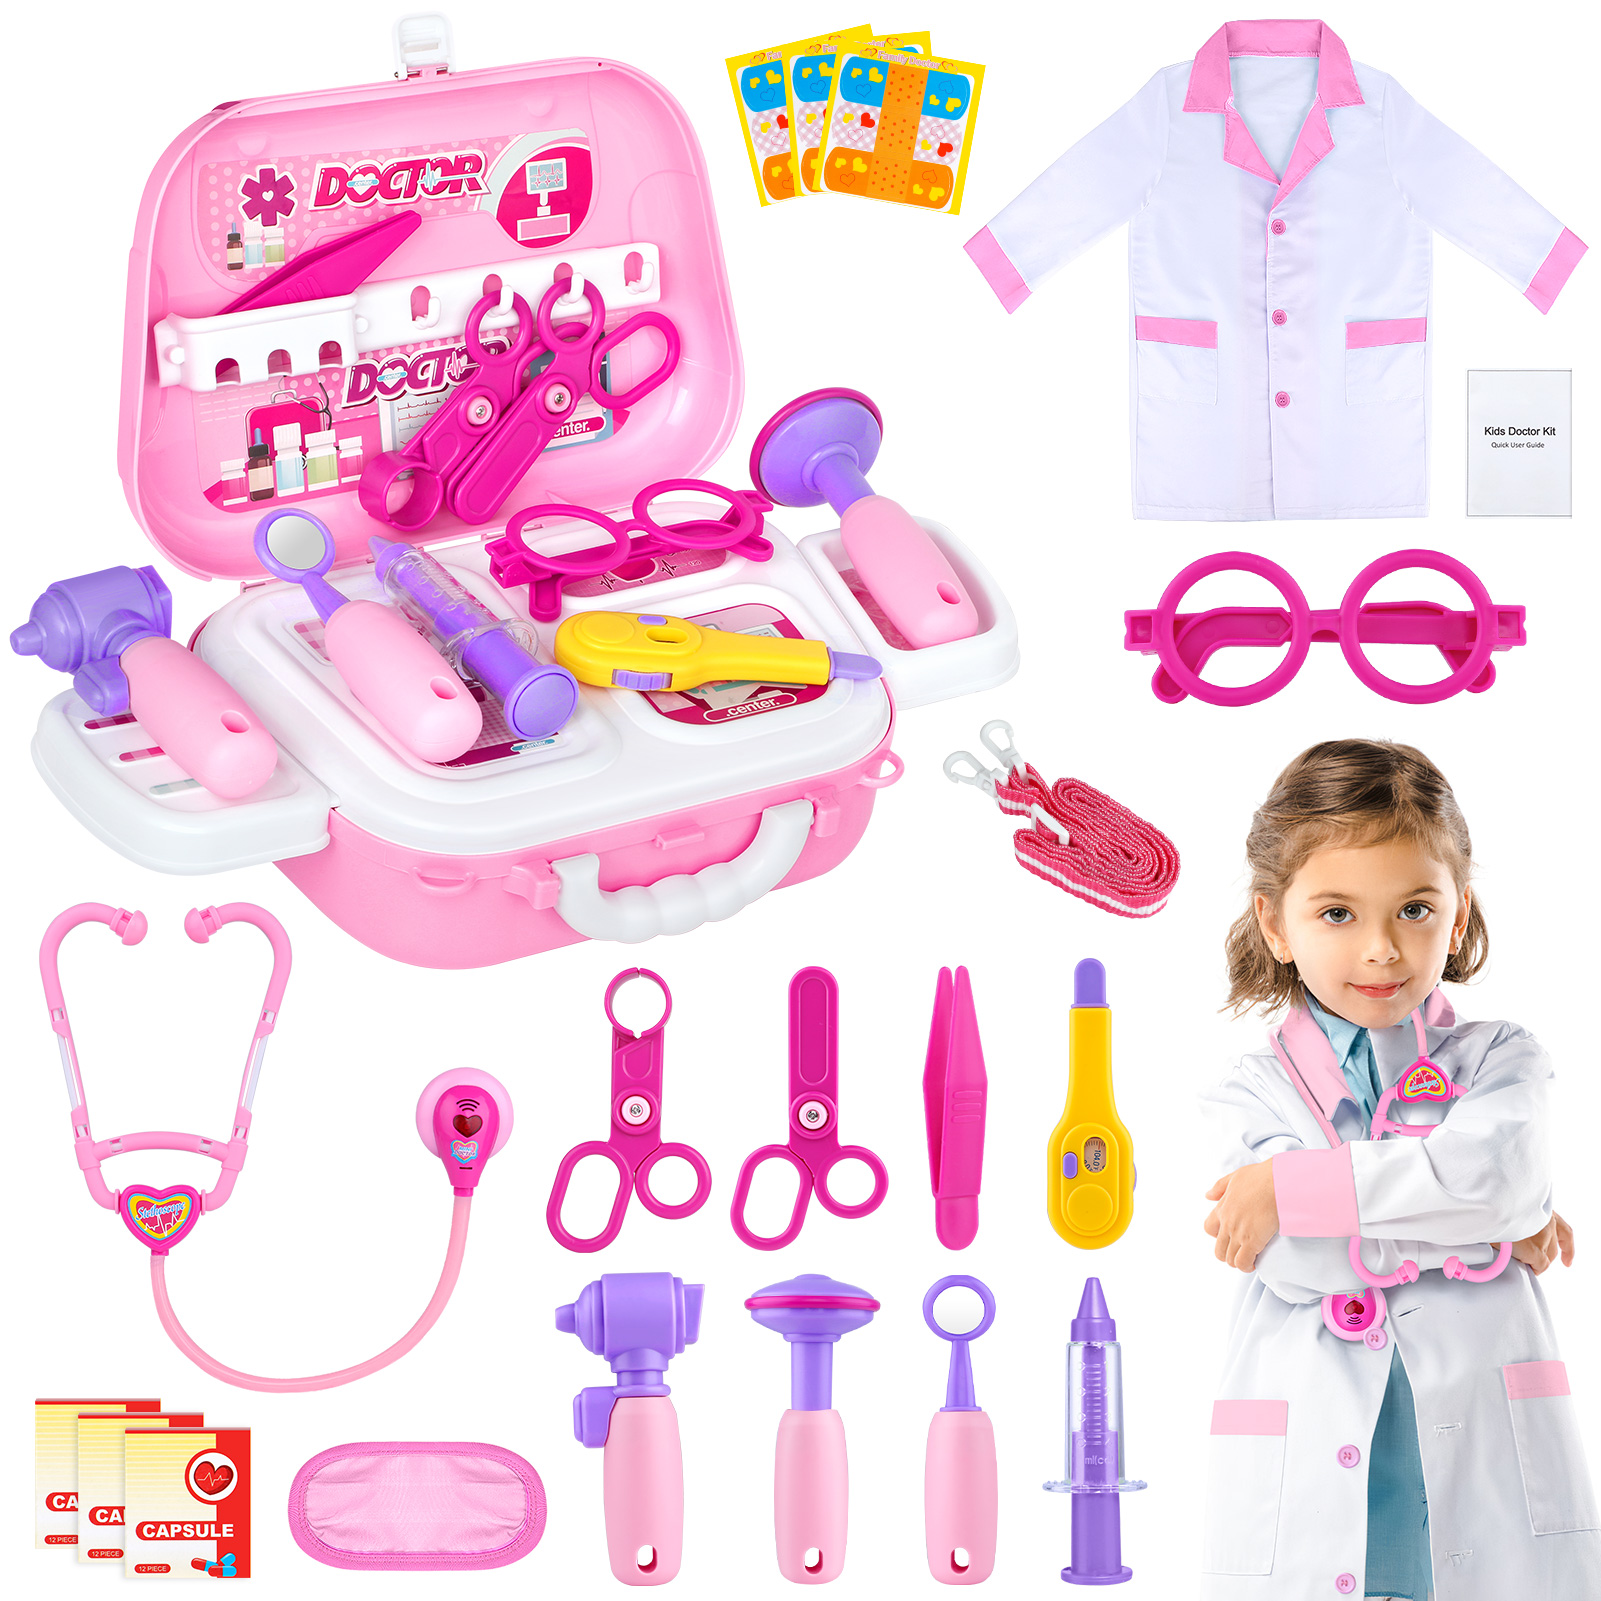 GIFTINBOX Kids Doctor Kit for Girls Pink Doctors kit for Kids